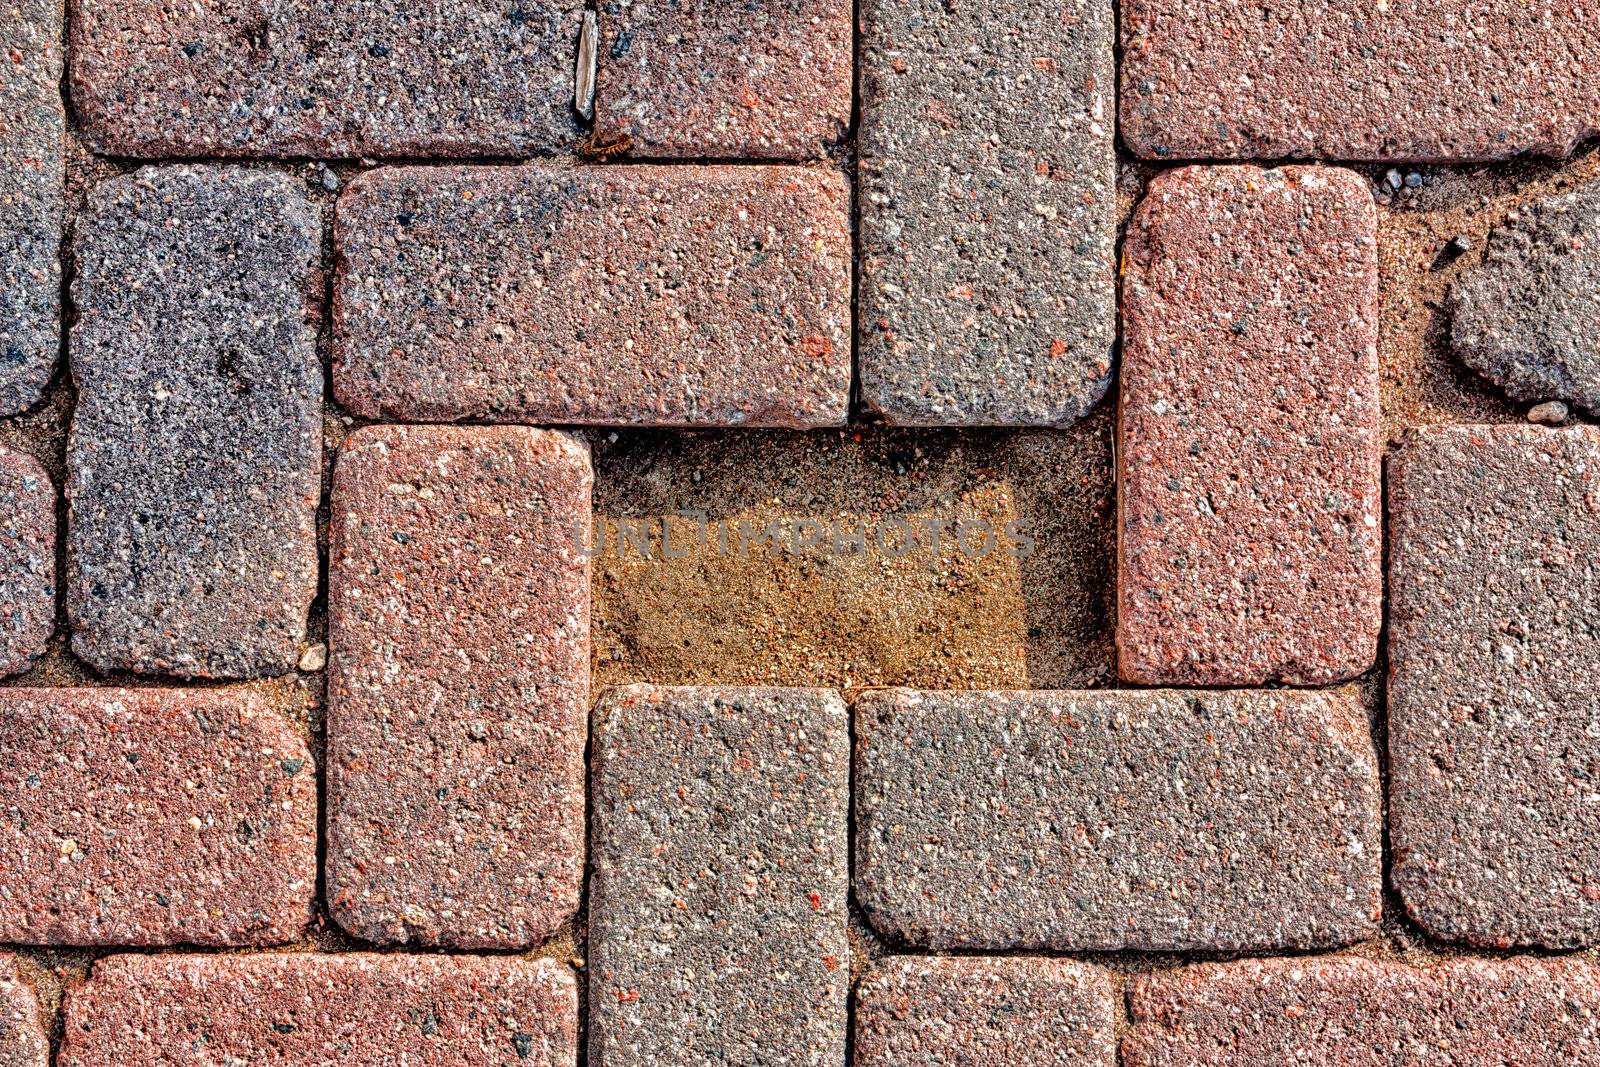 Missing Cobblestone Brick in Urban Street.